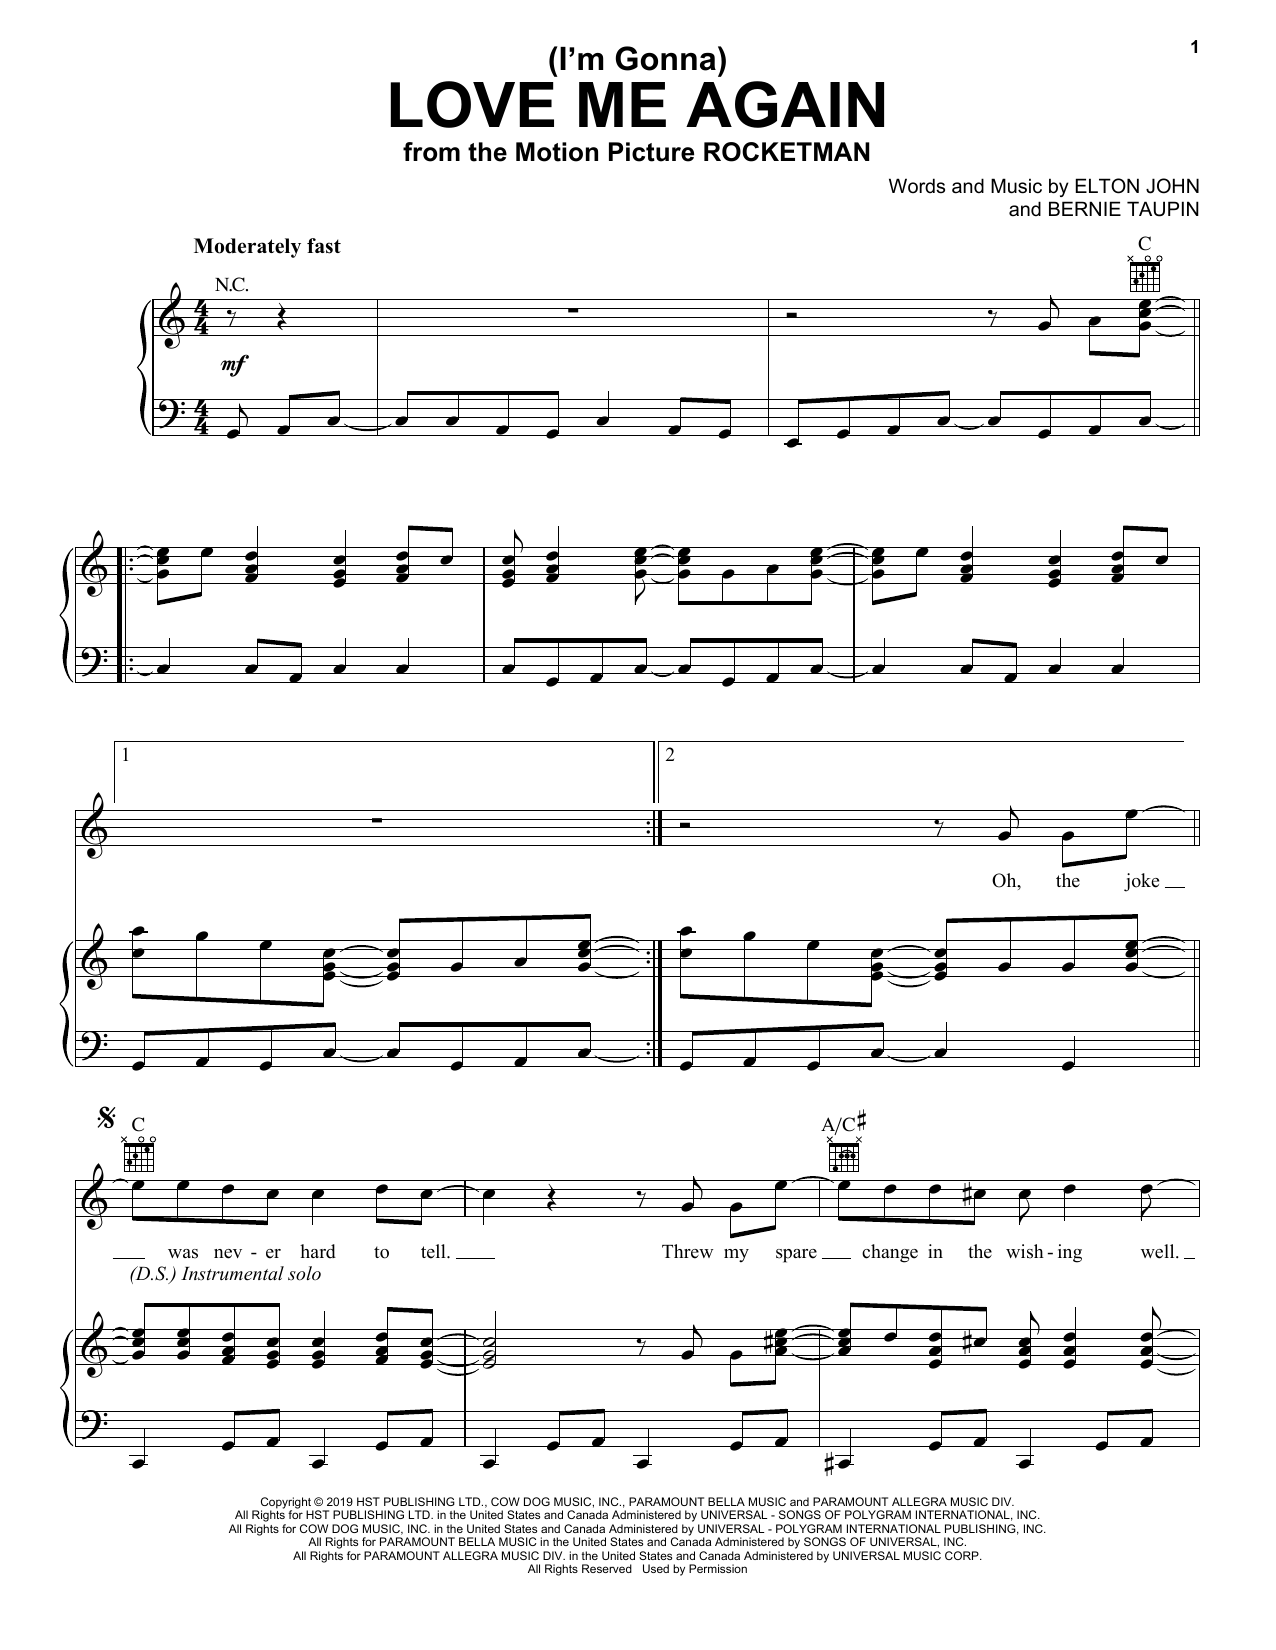 Download Elton John & Taron Egerton (I'm Gonna) Love Me Again (from Rocketman) Sheet Music and learn how to play Guitar Chords/Lyrics PDF digital score in minutes